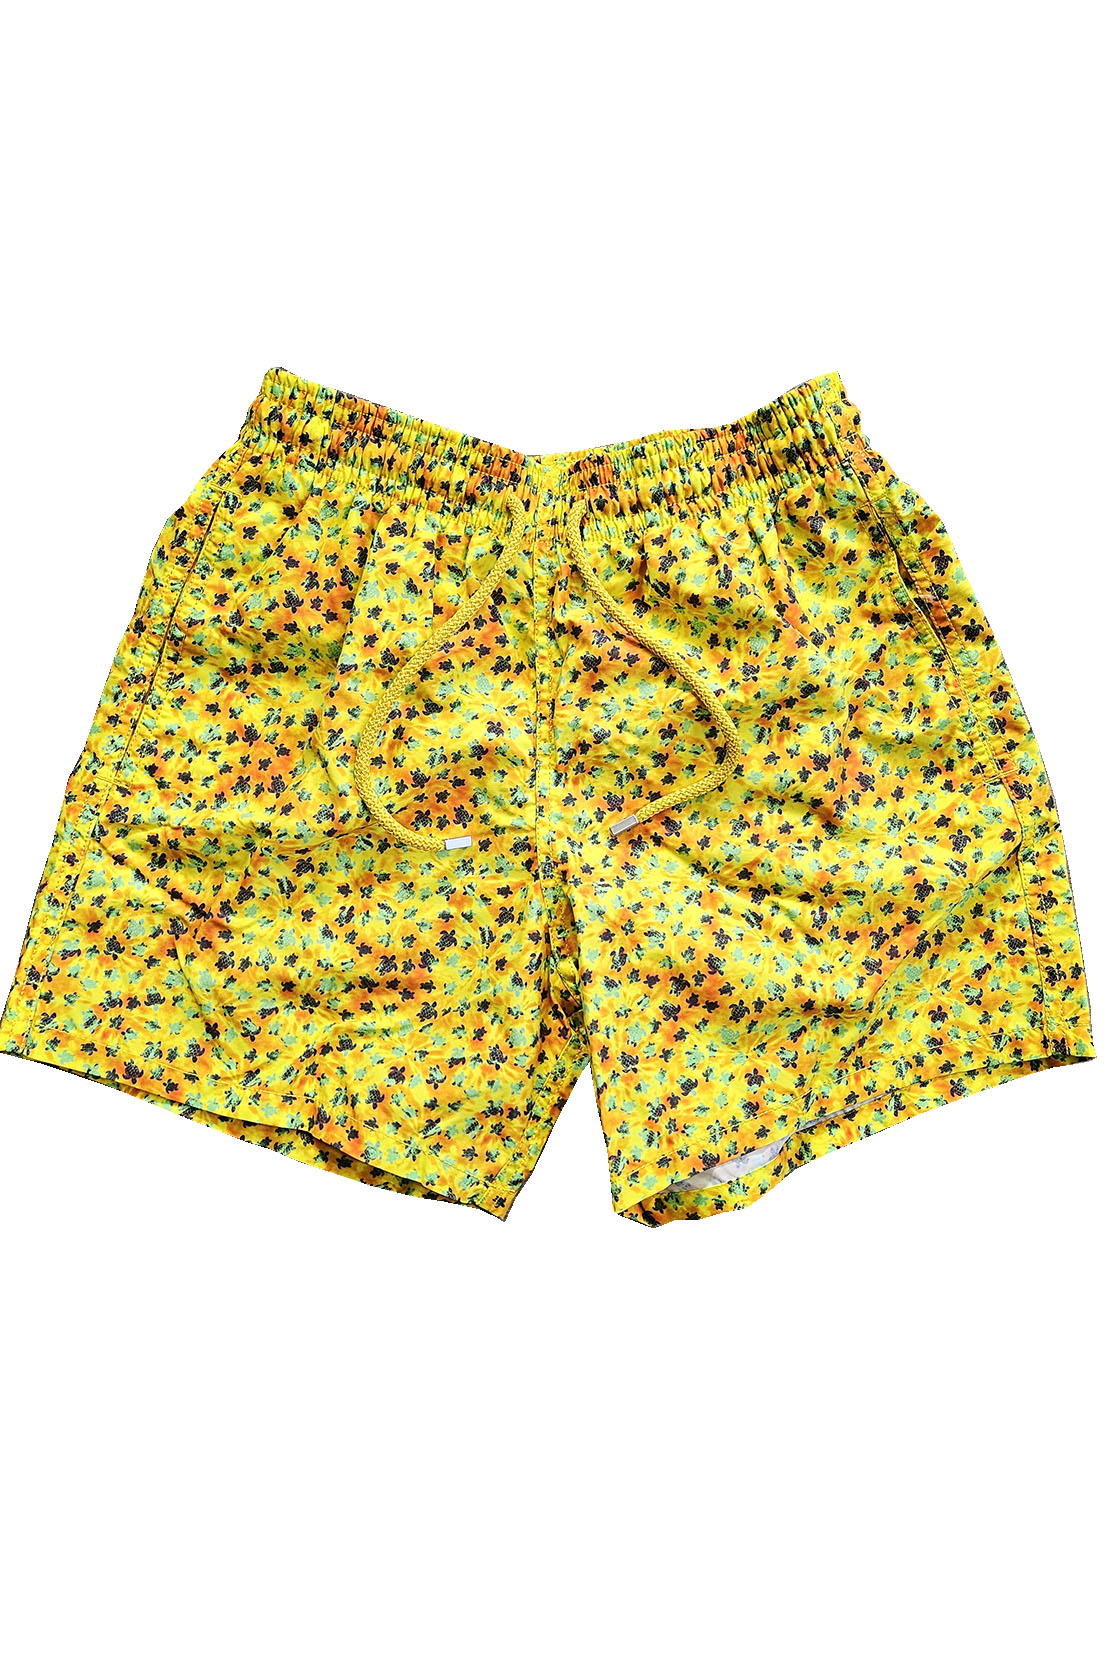 VILEBREQUIN - Sun Yellow MOOREA Micro Turtles Swim Shorts MOOC4B38-110